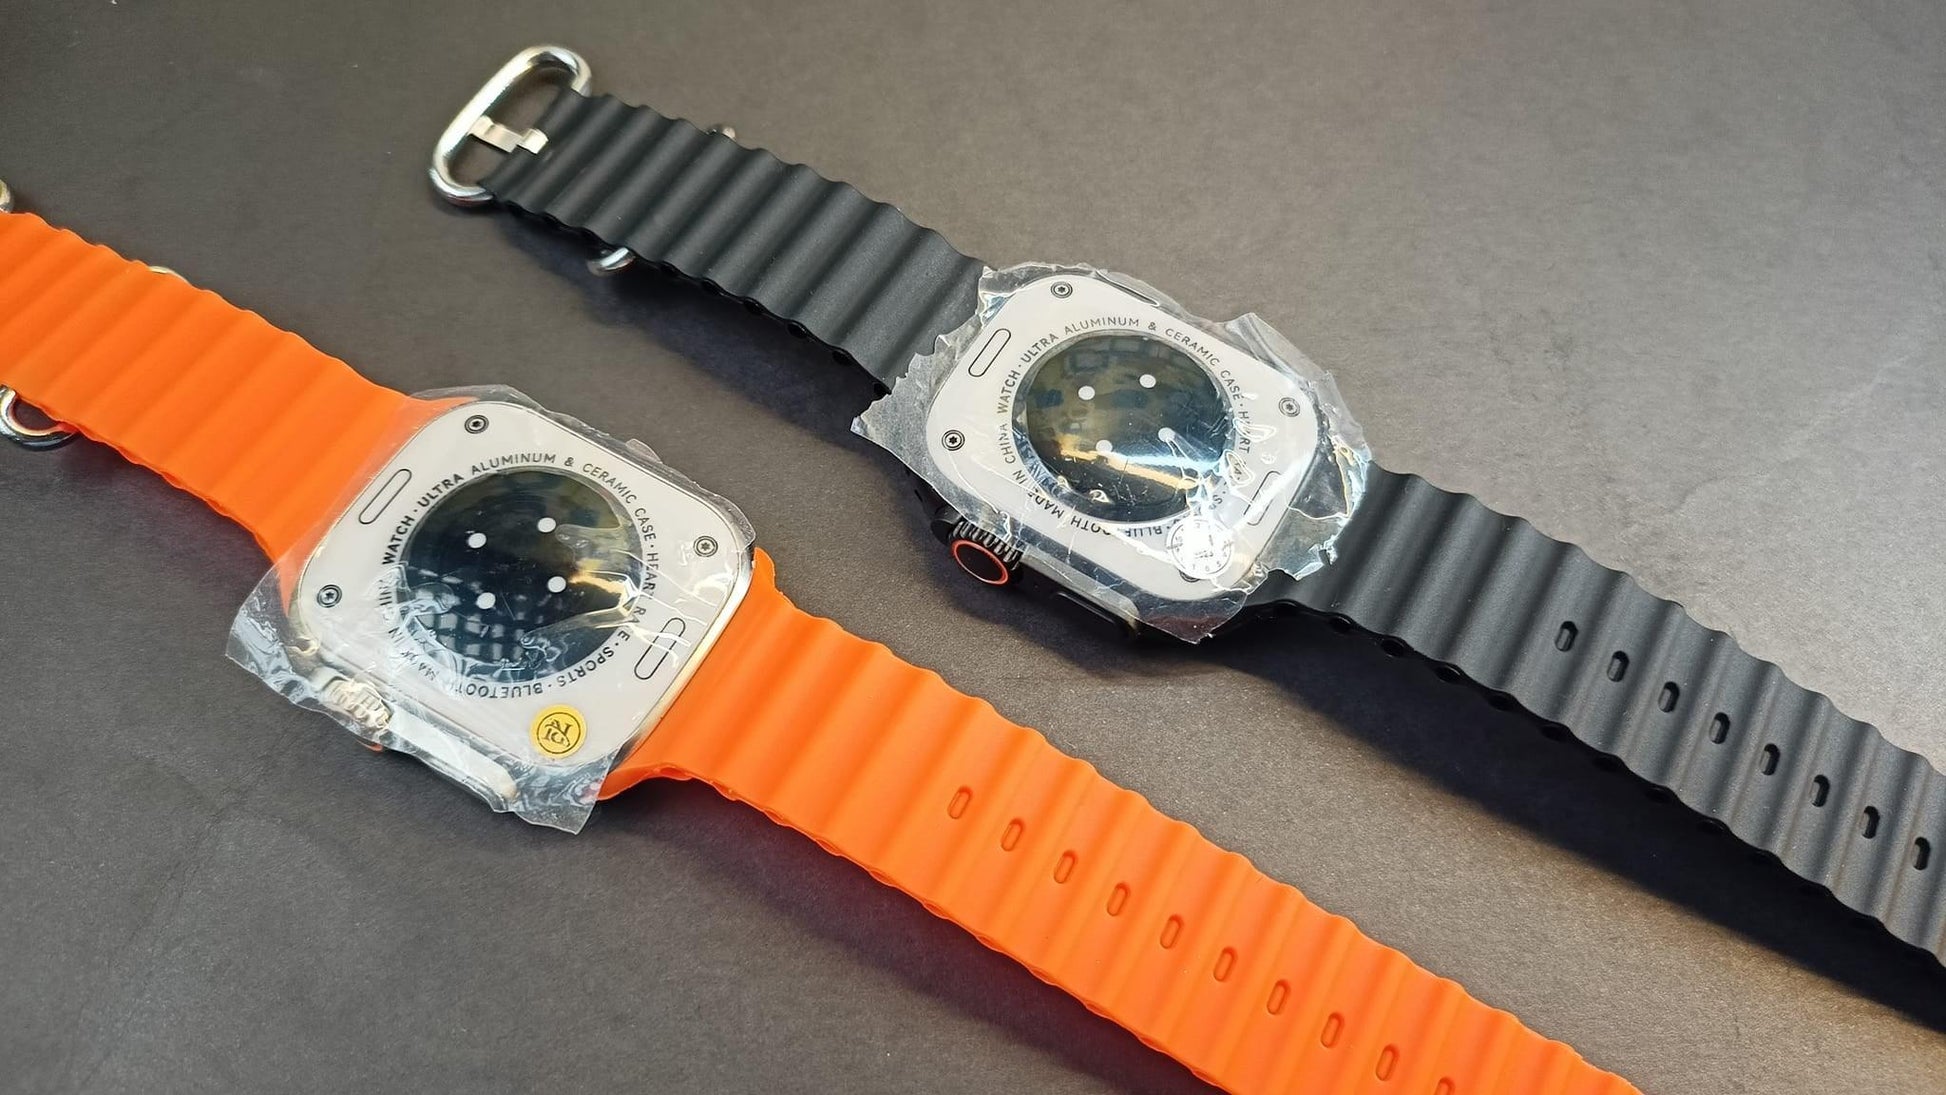 T900 Ultra BIG Smart Watch - HT Bazar